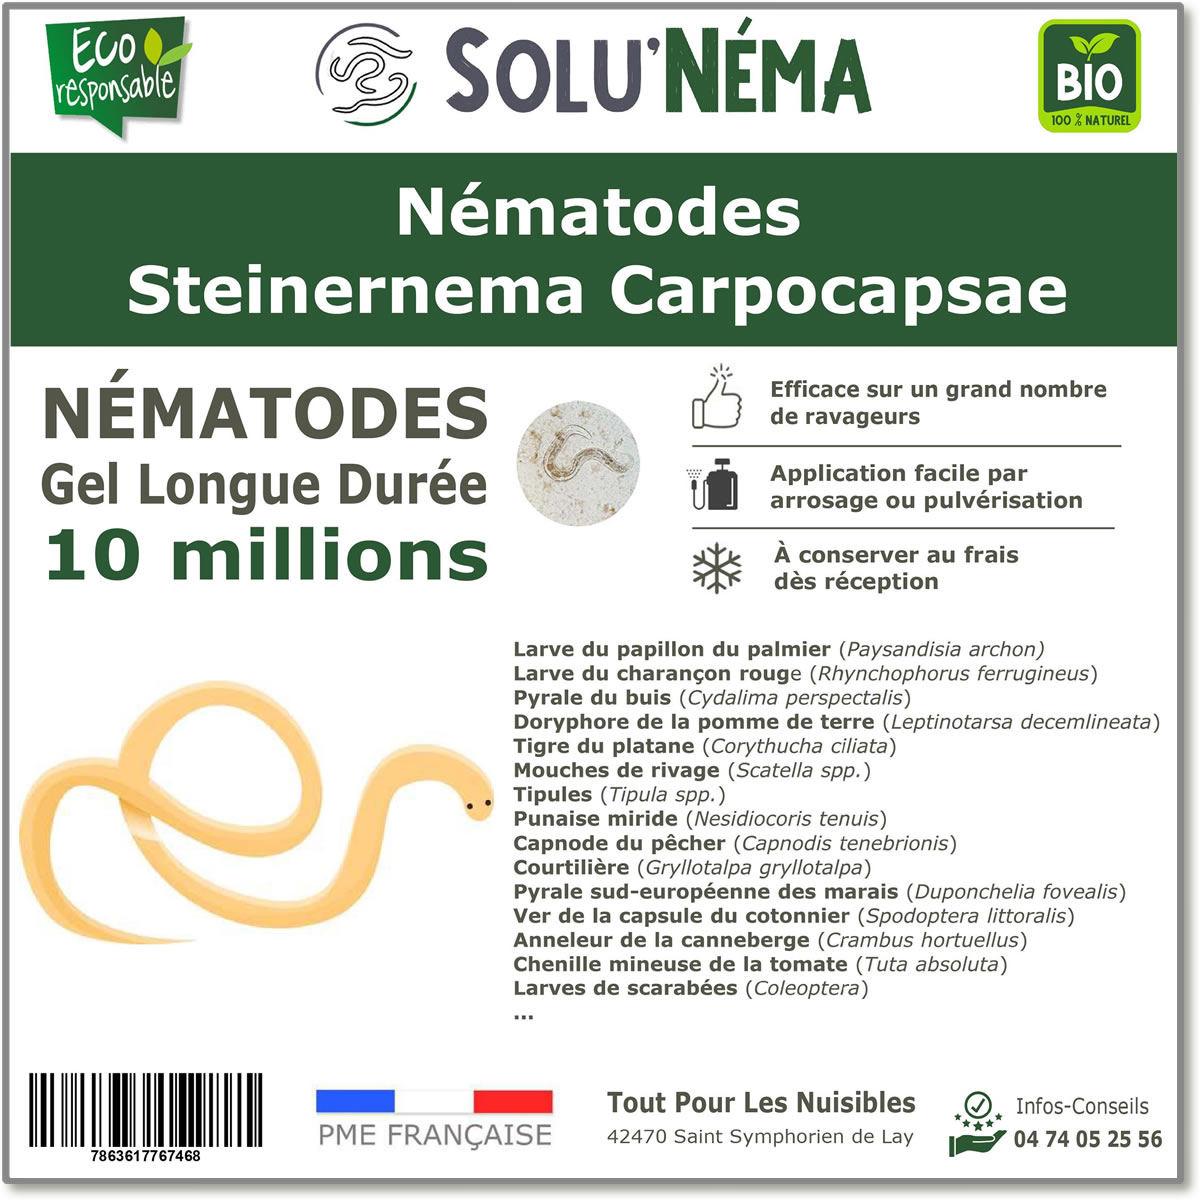 10 miljoen Steinernema Carpocapsae (SC) Nematoden